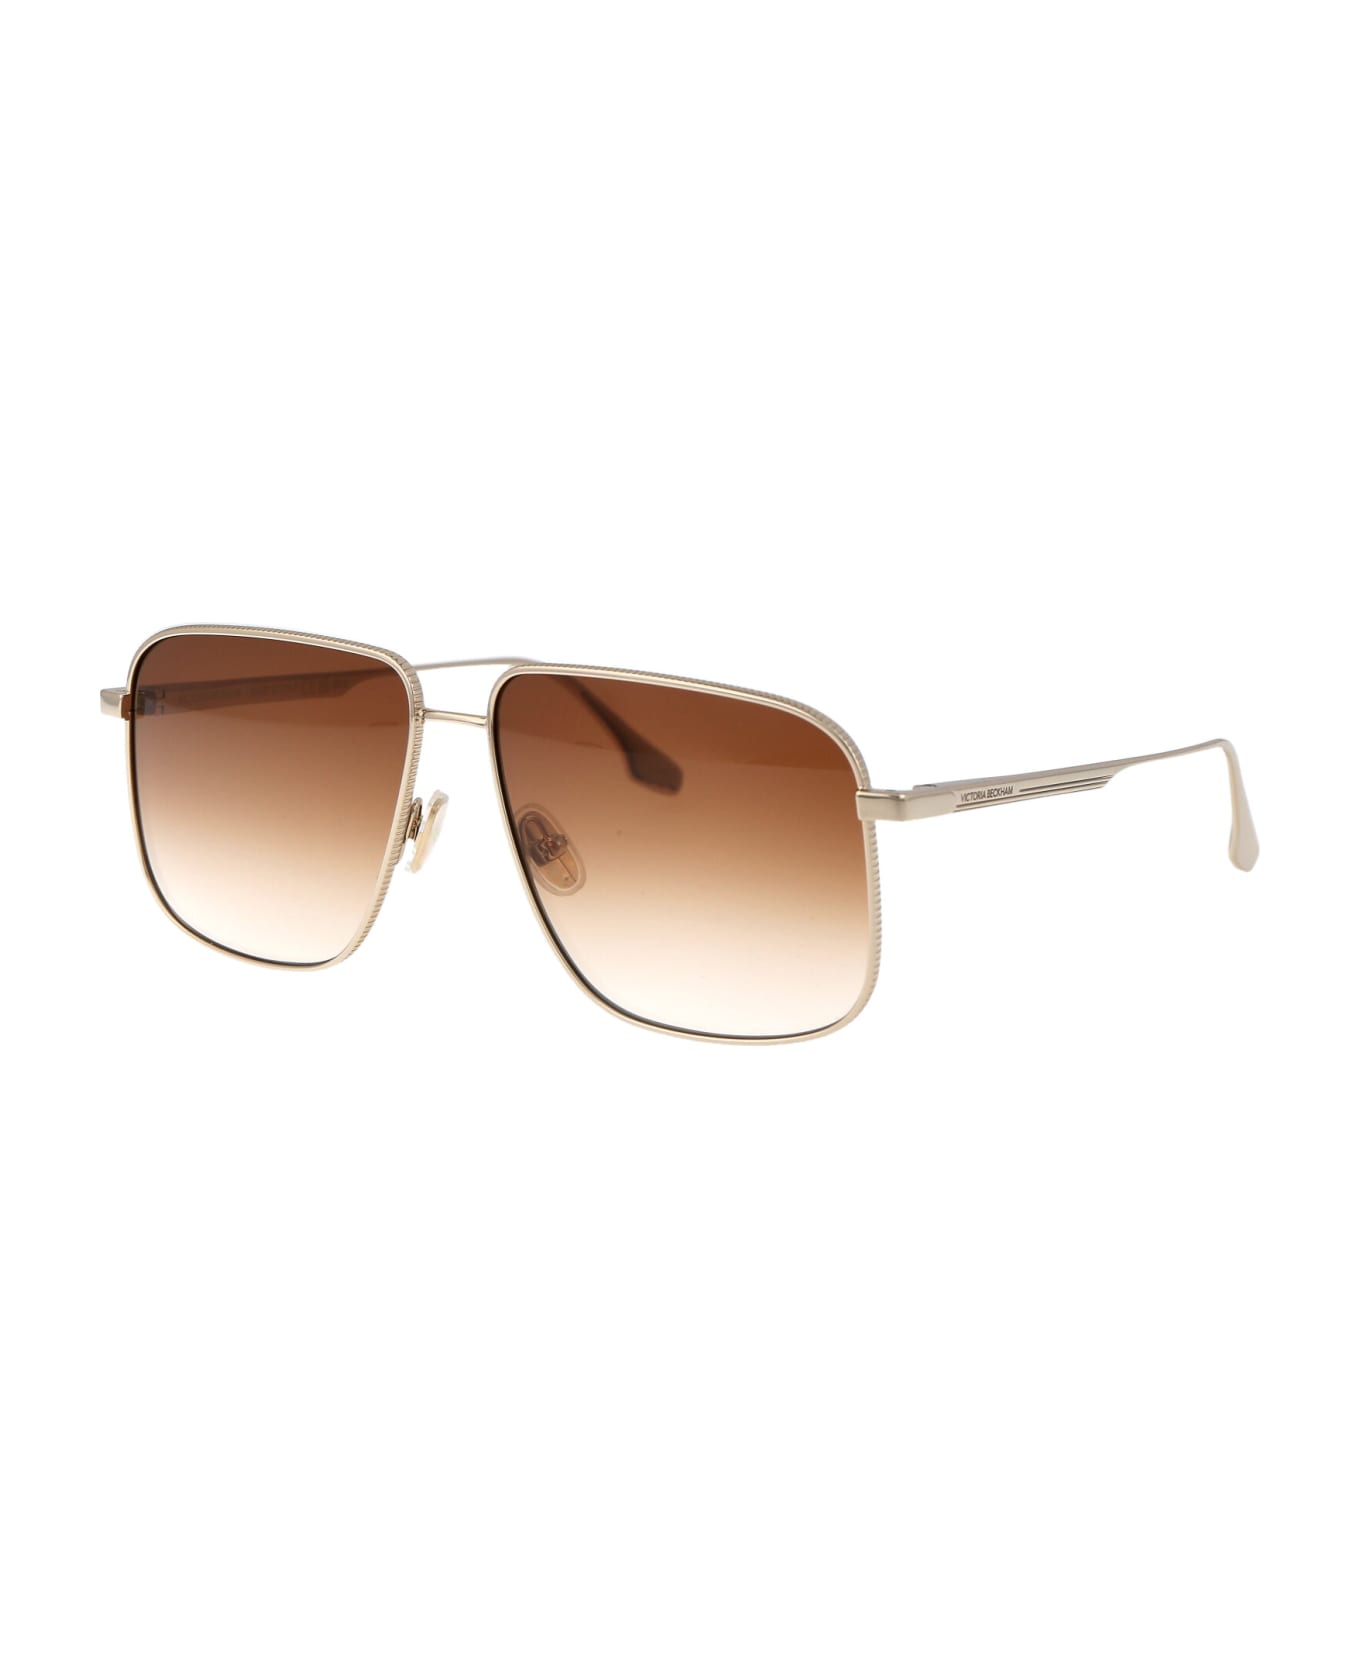 Victoria Beckham Vb243s Sunglasses - 723 GOLD/HONEY GRADIENT サングラス